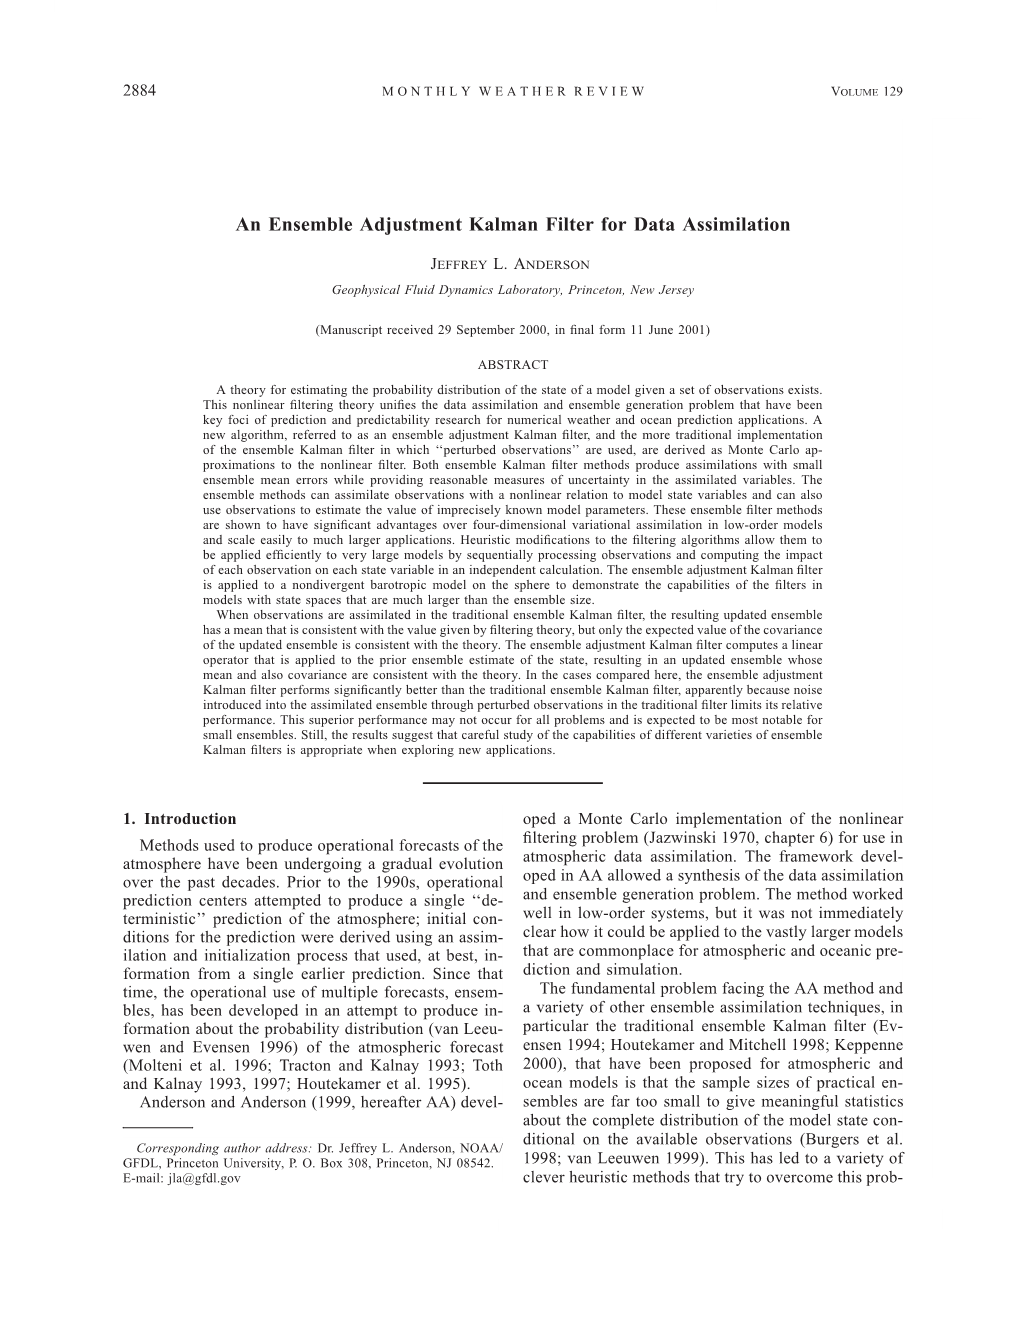 An Ensemble Adjustment Kalman Filter for Data Assimilation